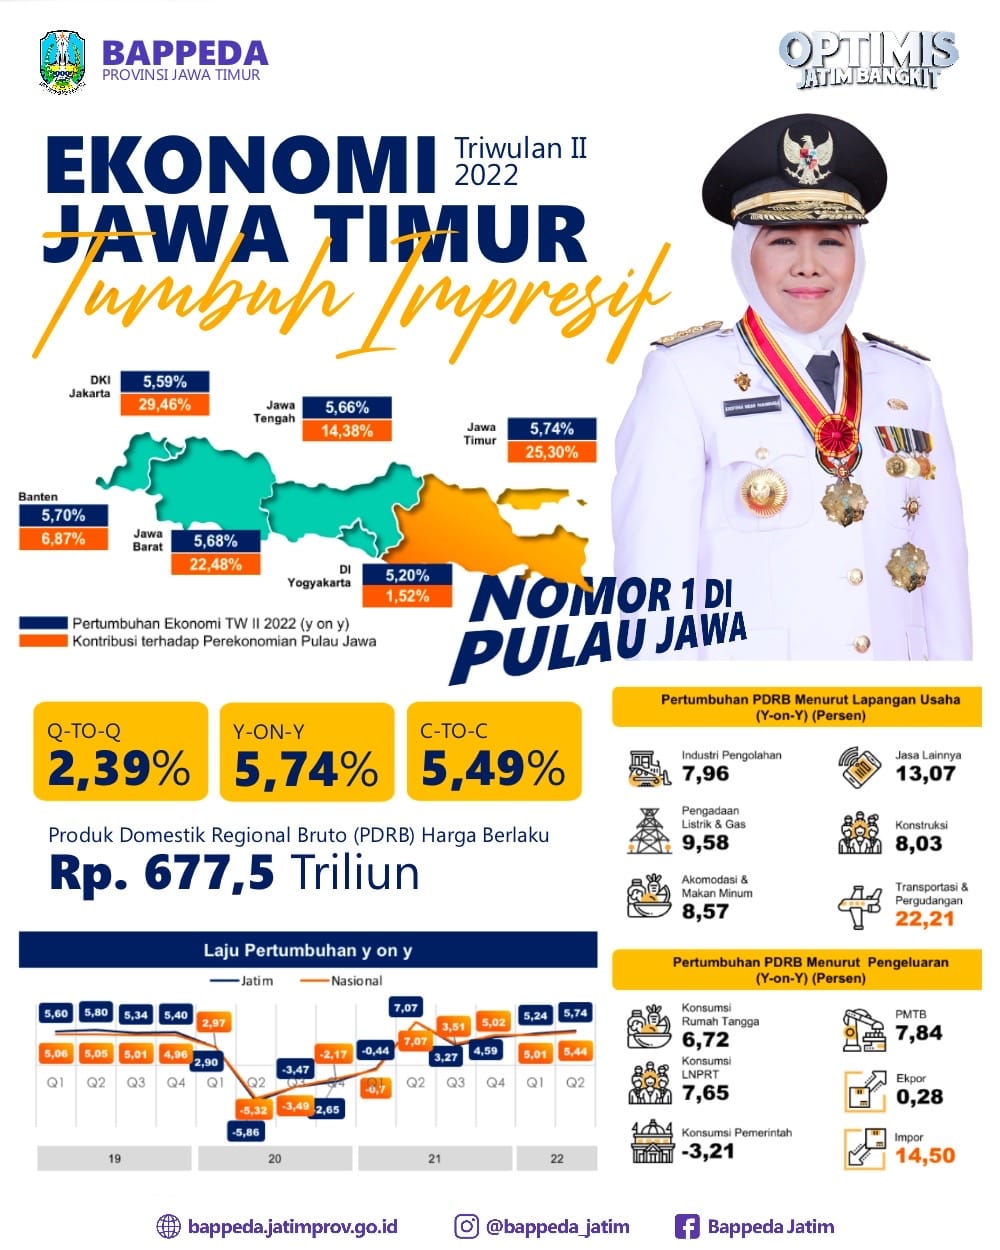 Bagan pertumbuhan ekonomi Jawa Timur di bawah kepemimpinan Gubernur Jawa Timur, Khofifah Indar Parawansa.